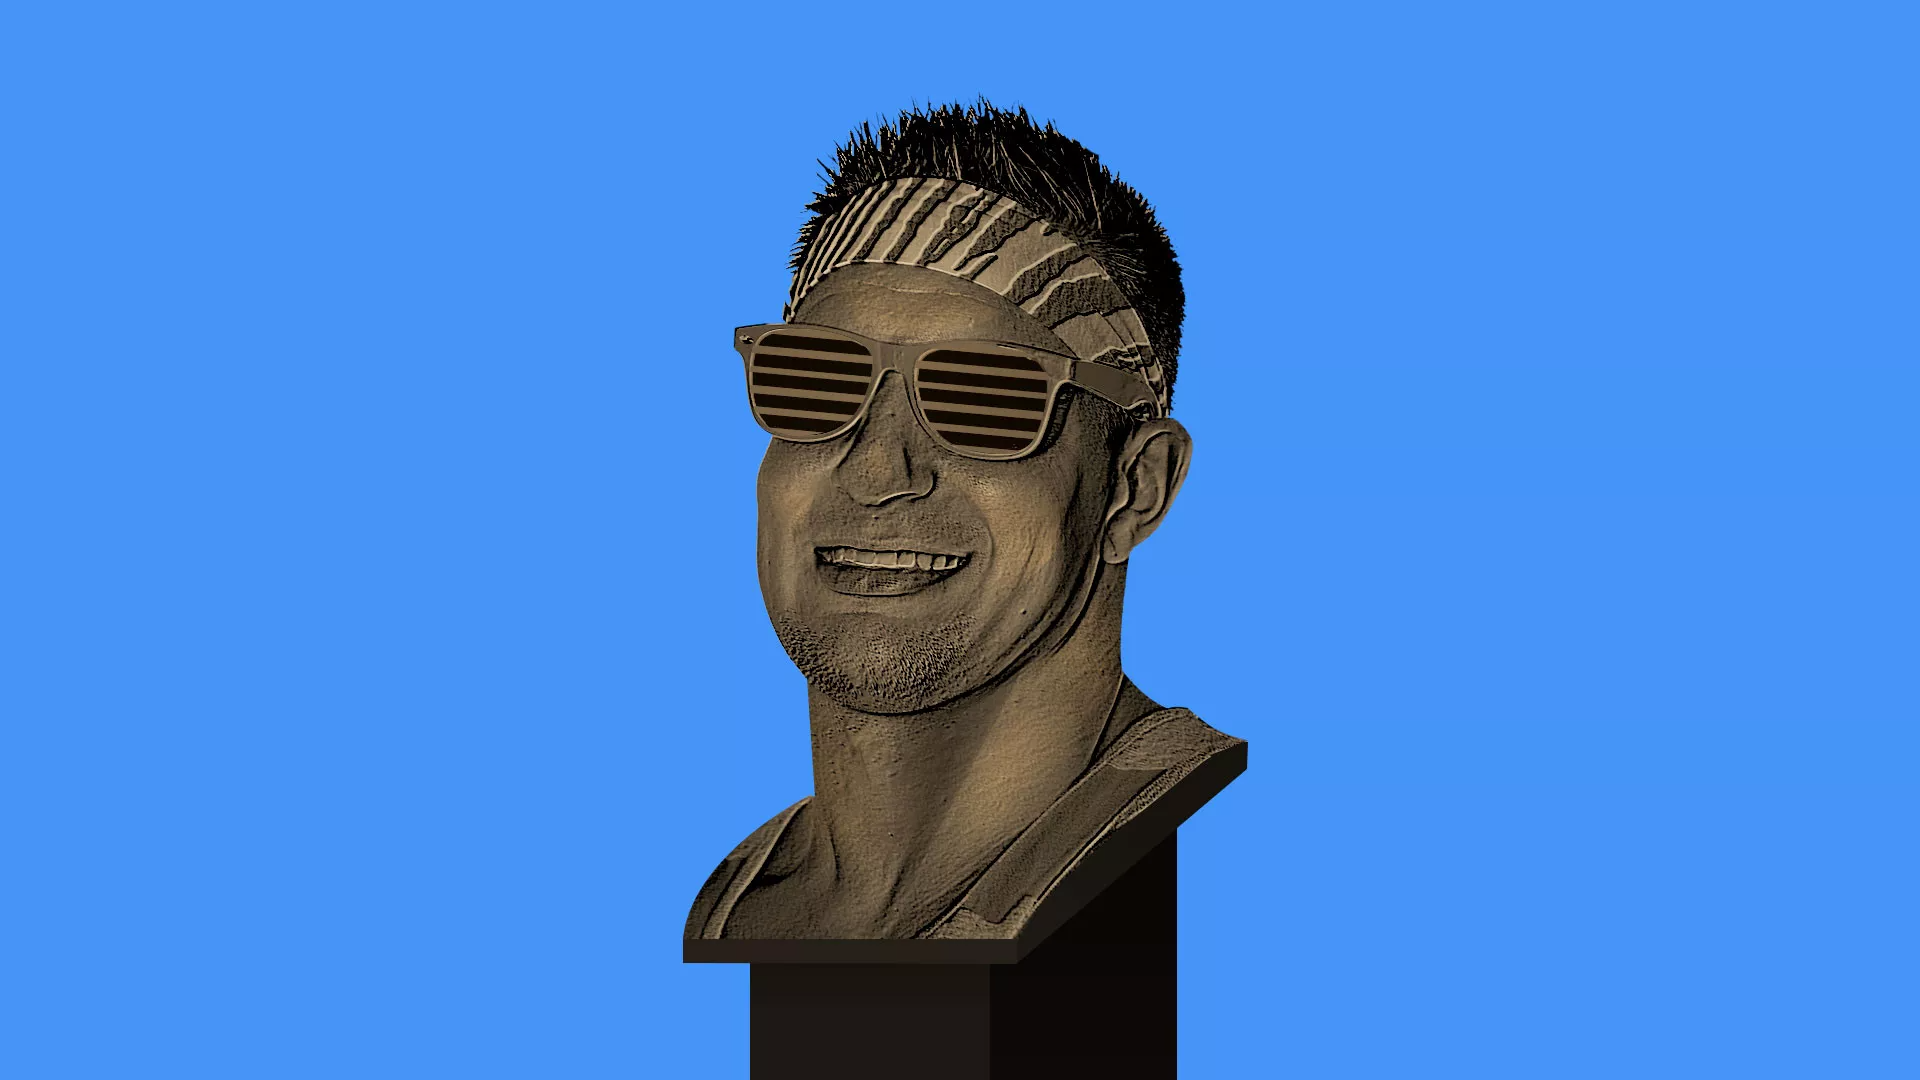 Illustration of Rob Gronkowski's football HOF bust with sunglasses and bandana.